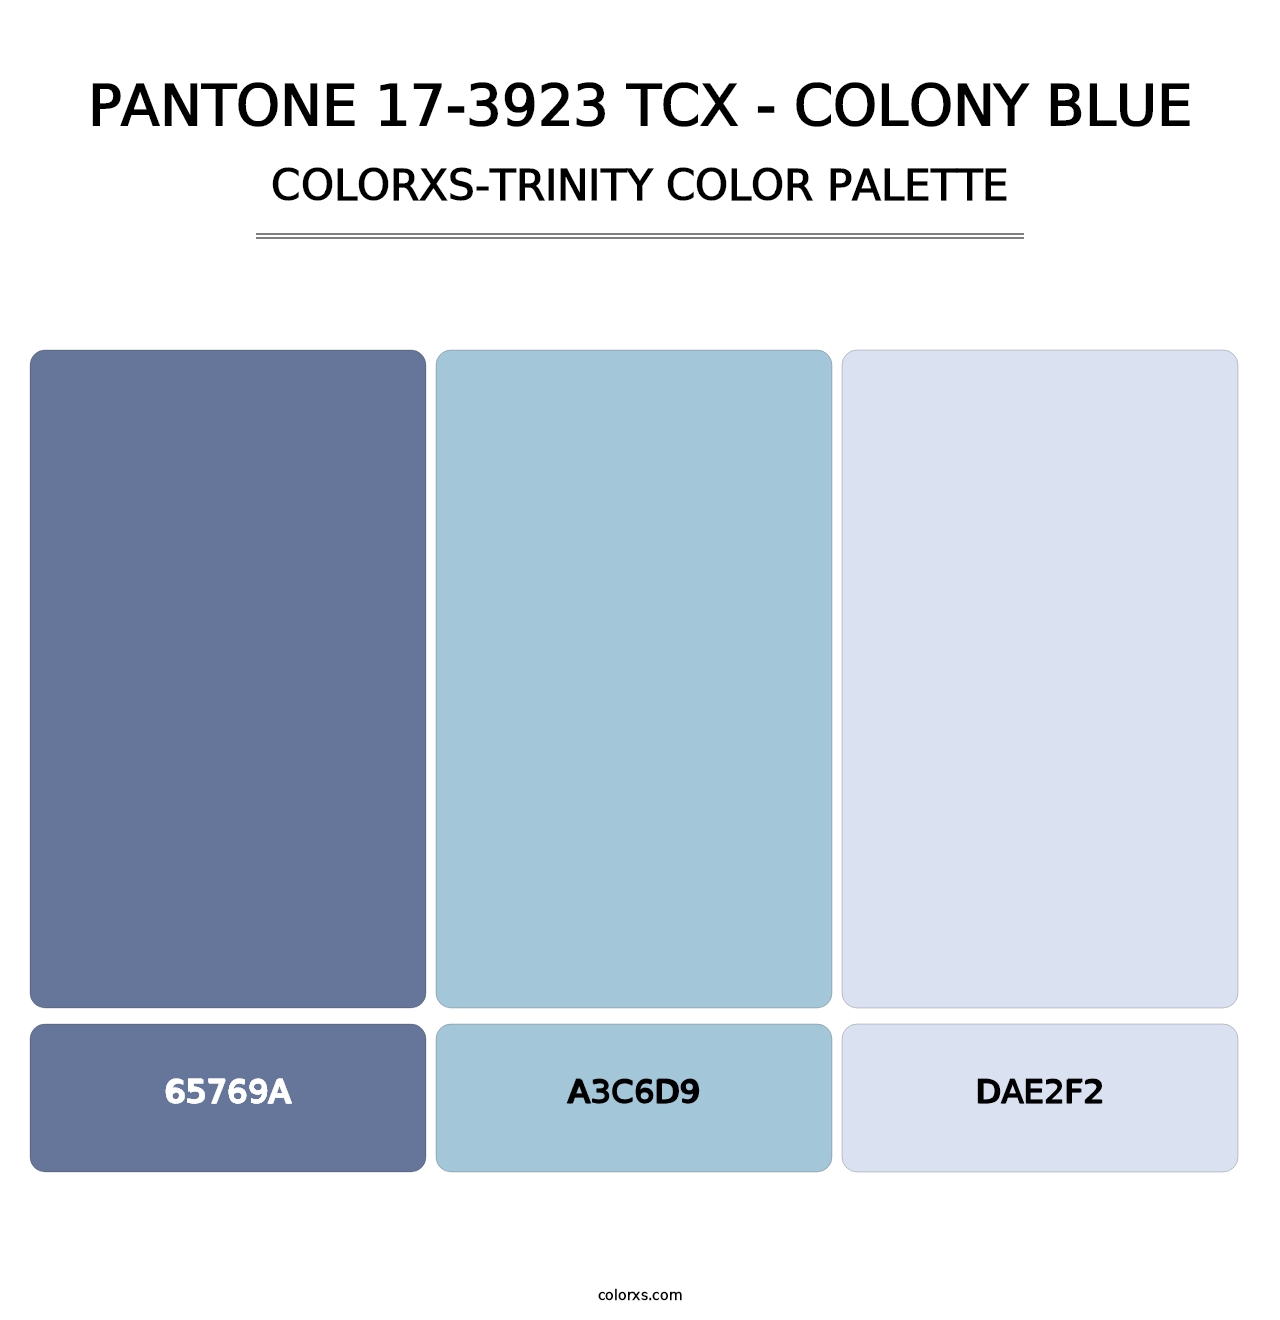 PANTONE 17-3923 TCX - Colony Blue - Colorxs Trinity Palette